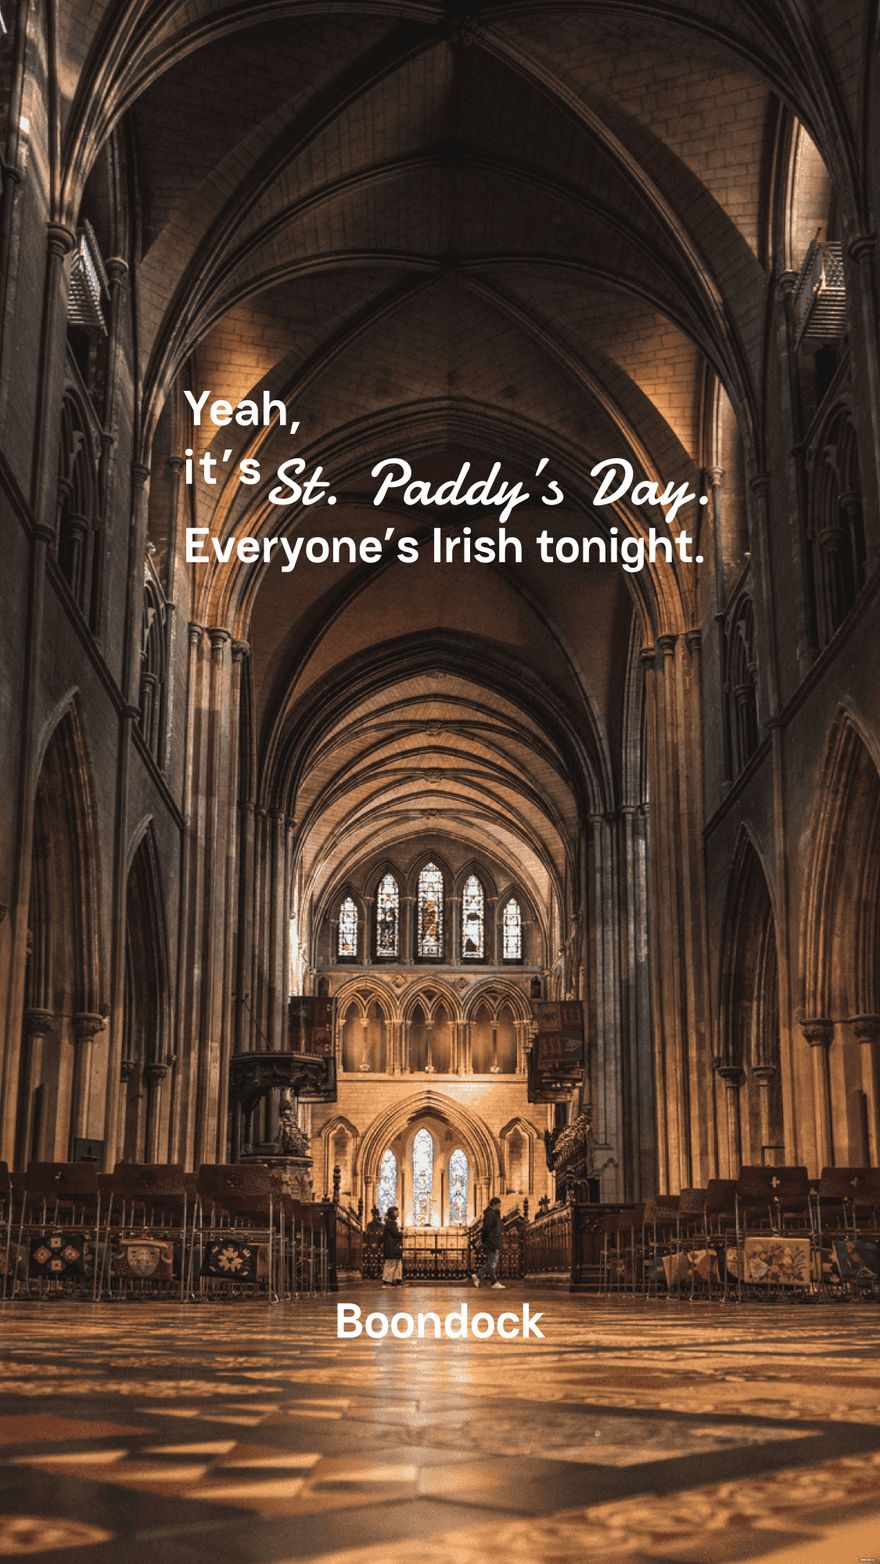 Boondock - Yeah, it’s St. Paddy’s Day. Everyone’s Irish tonight.